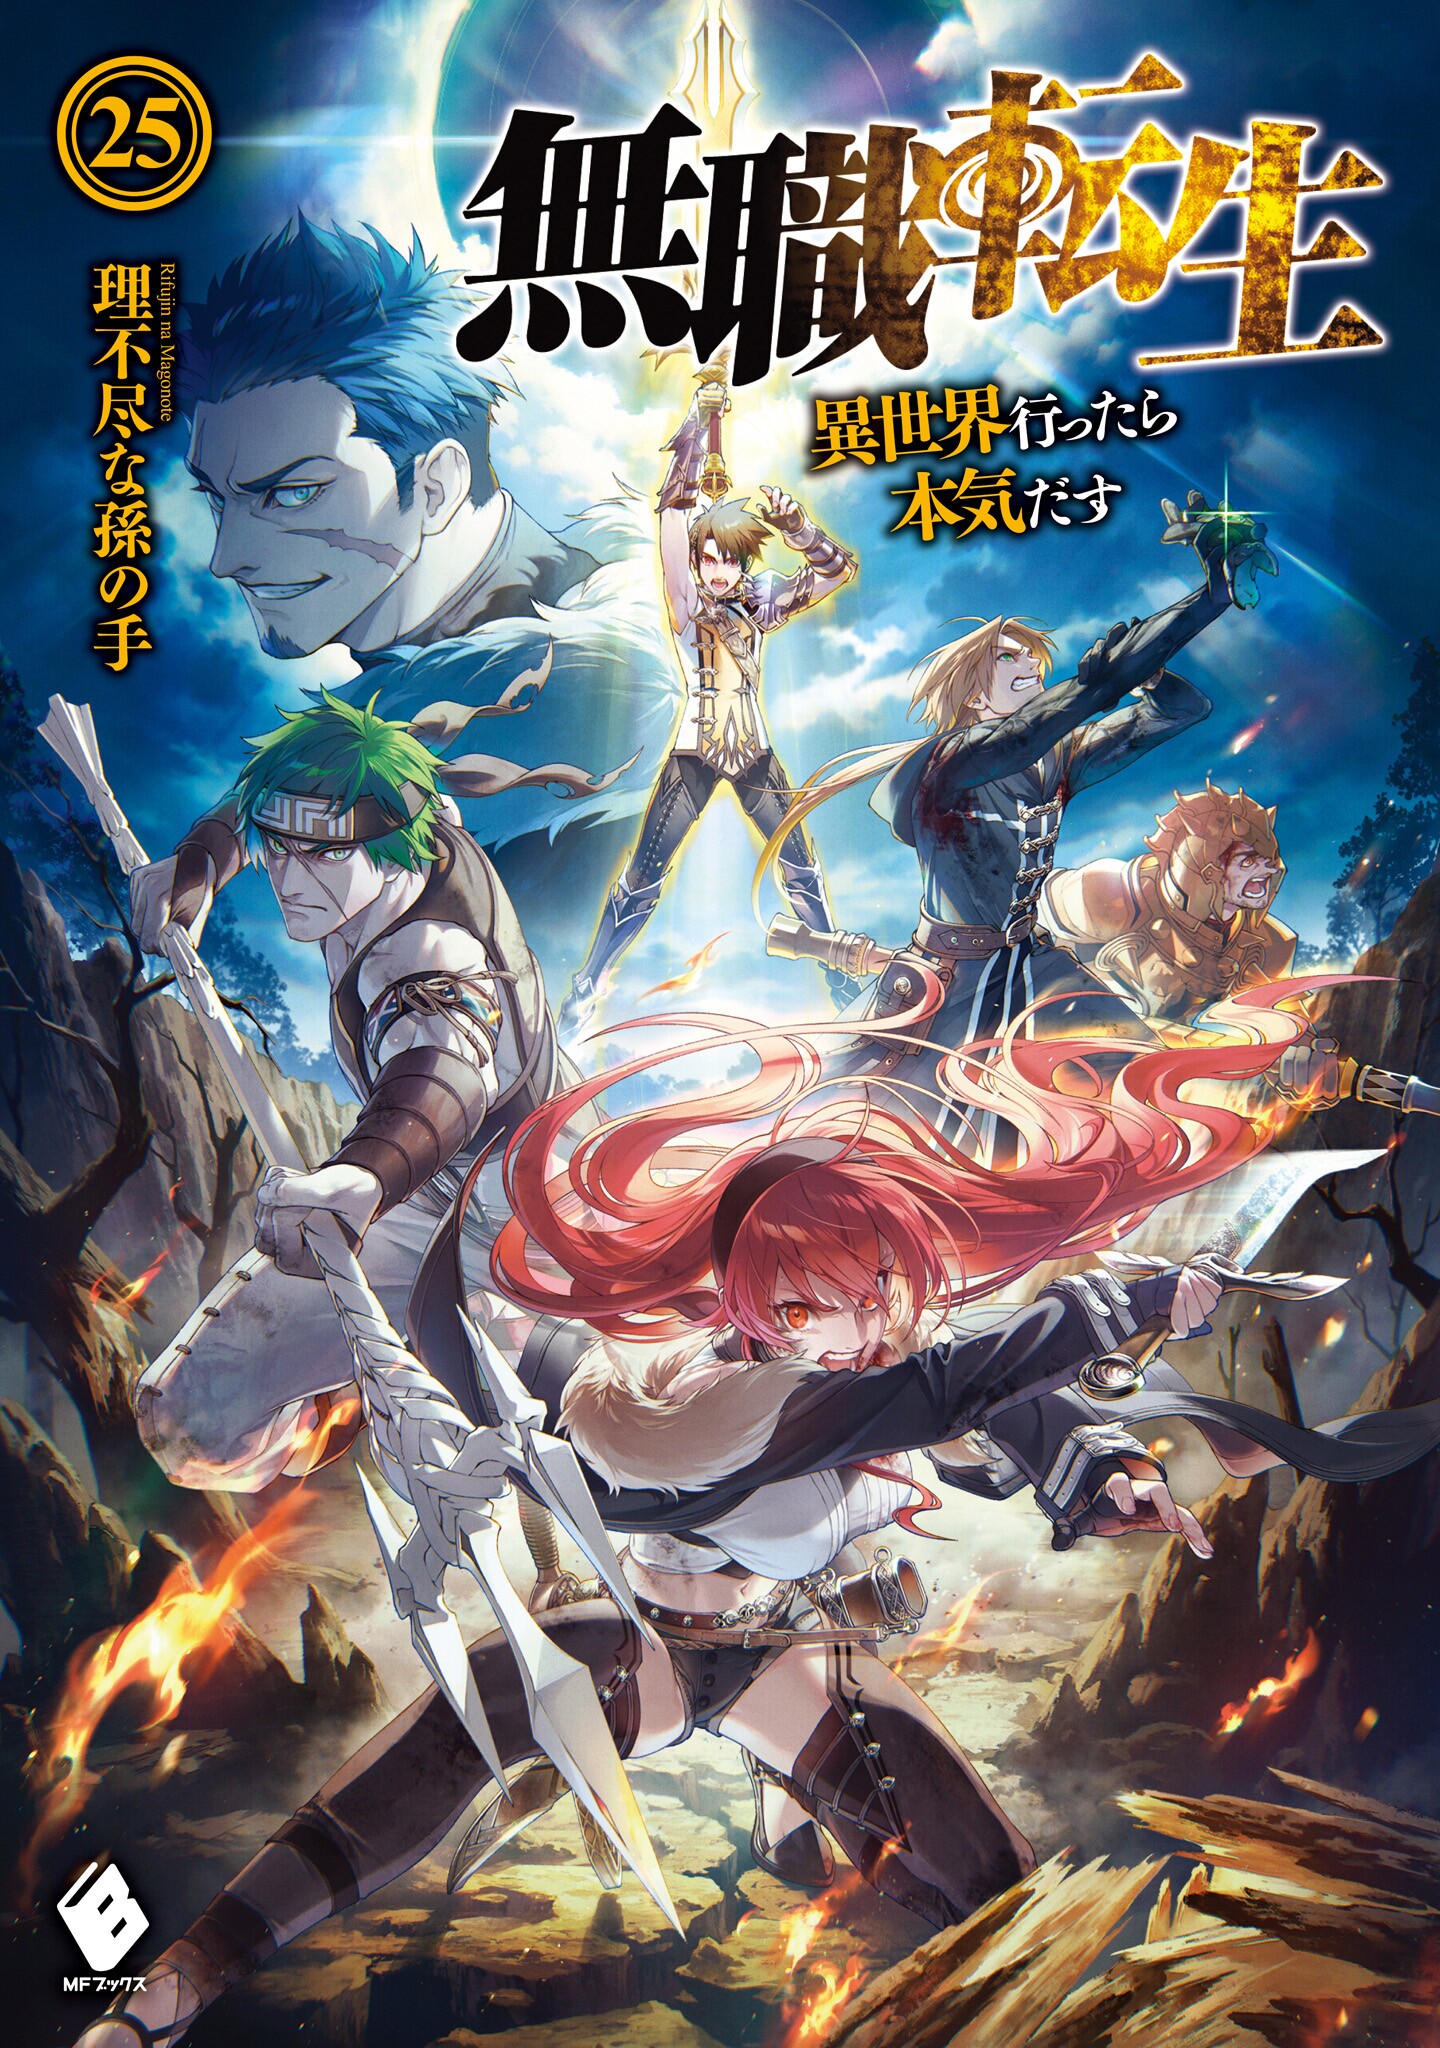 Light Novel Volume 25, Mushoku Tensei Wiki